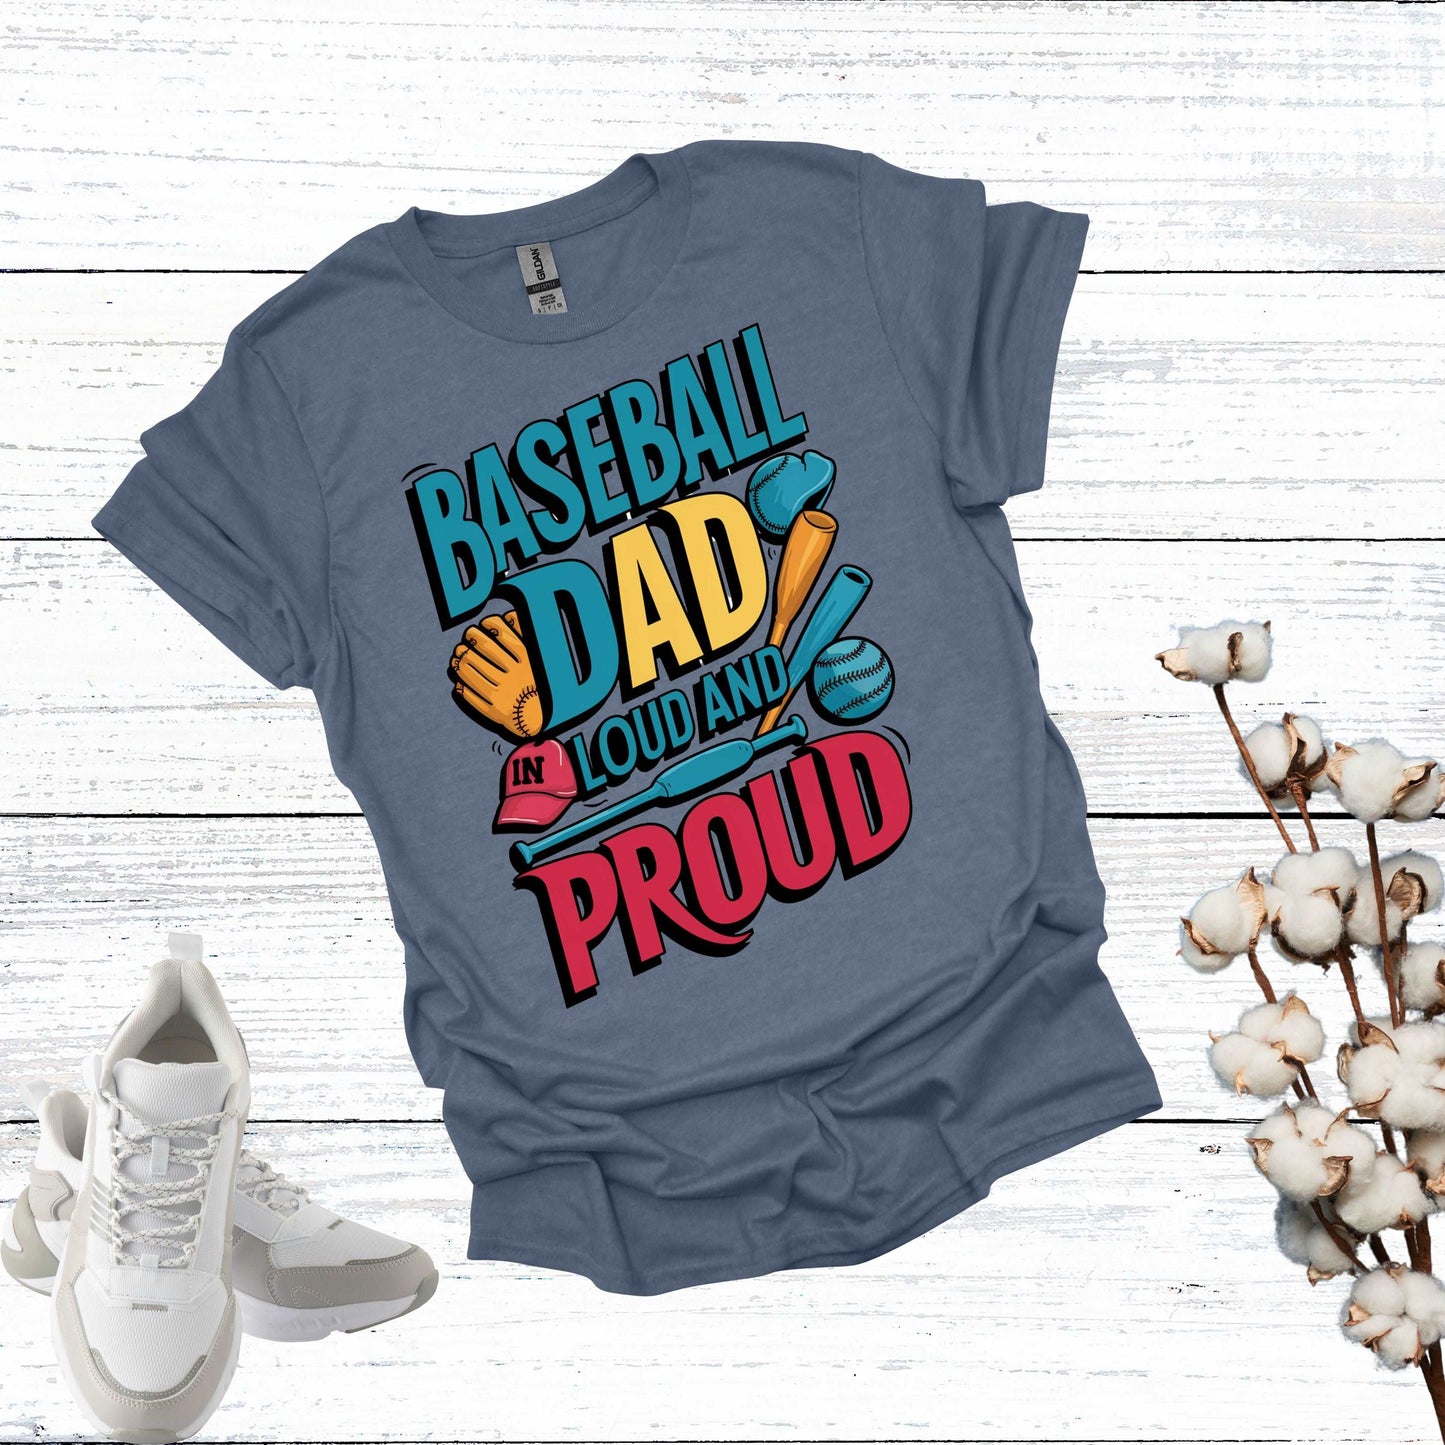 Baseball Dad Heather Indigo Shirt - Fathers are Loud and Proud